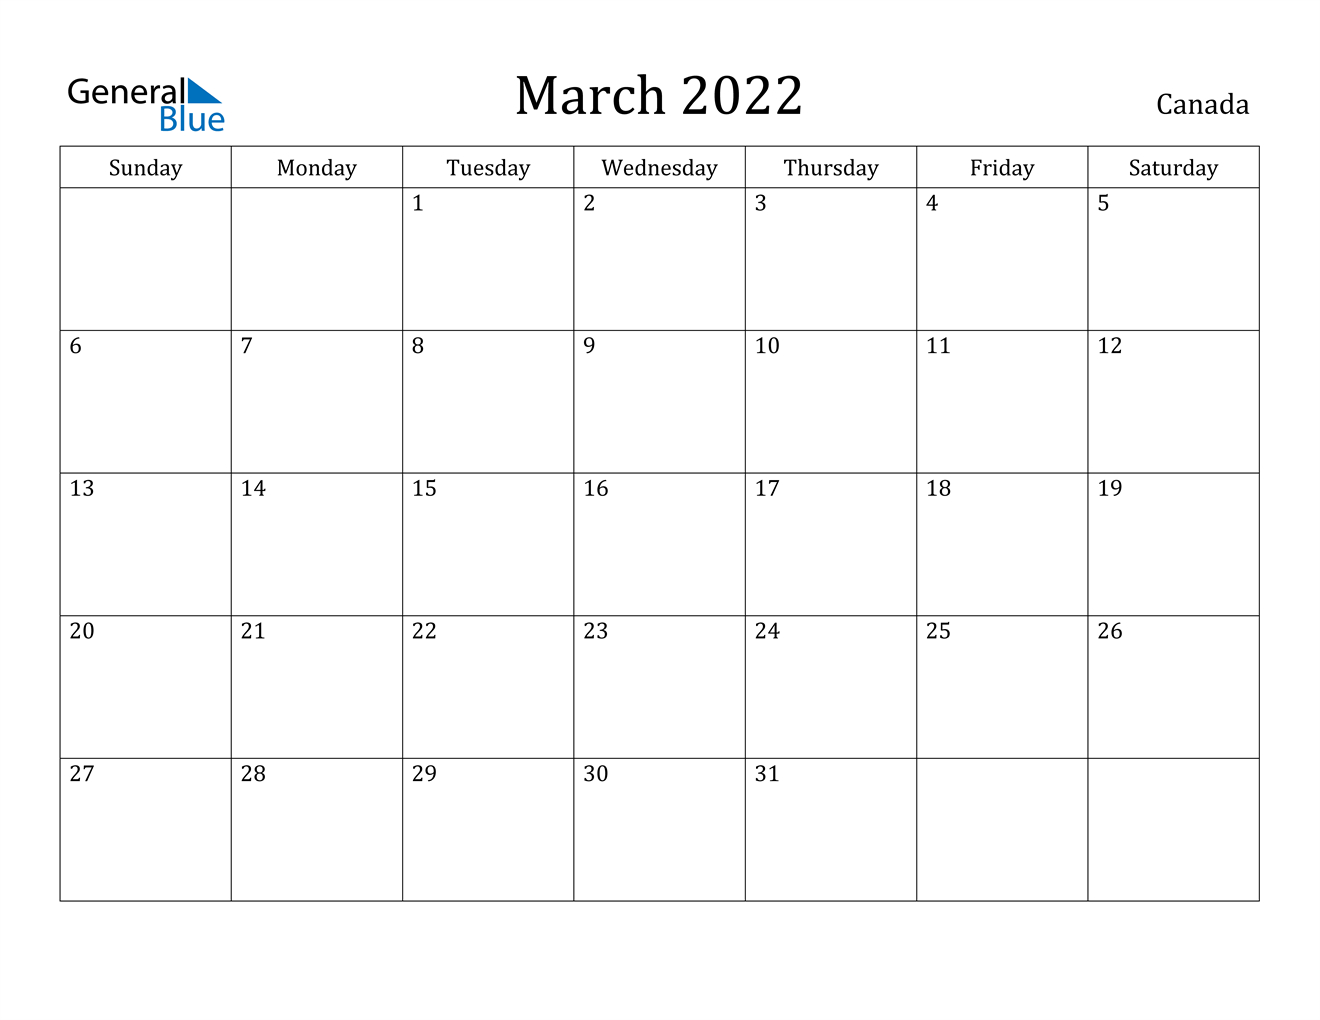 March 2022 Calendar - Canada